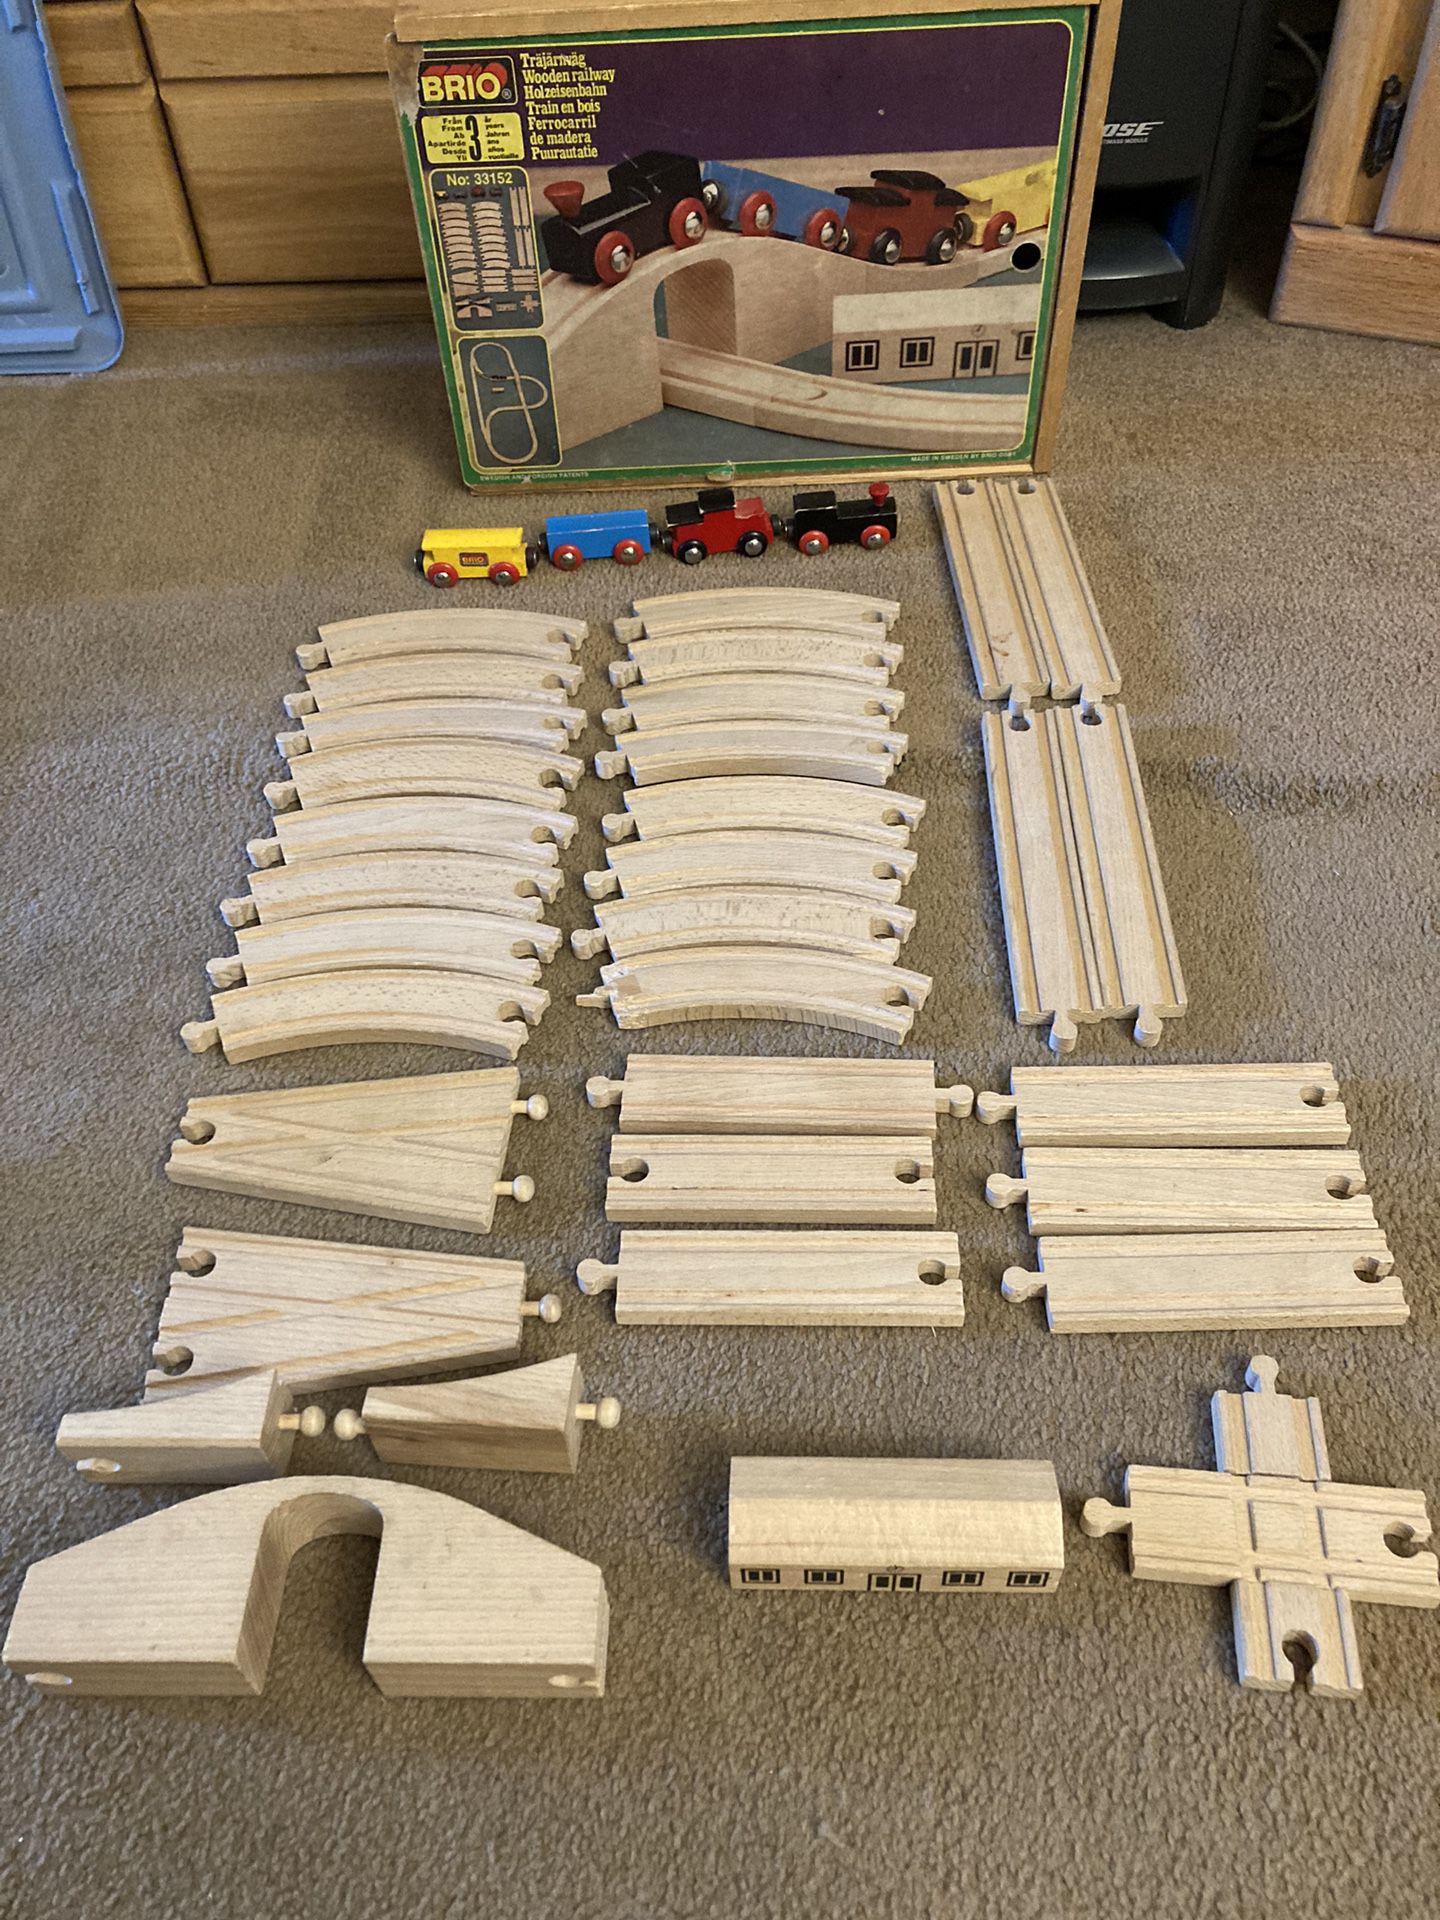 Brio Train Set Plus Added Pieces (52 Total Pieces)